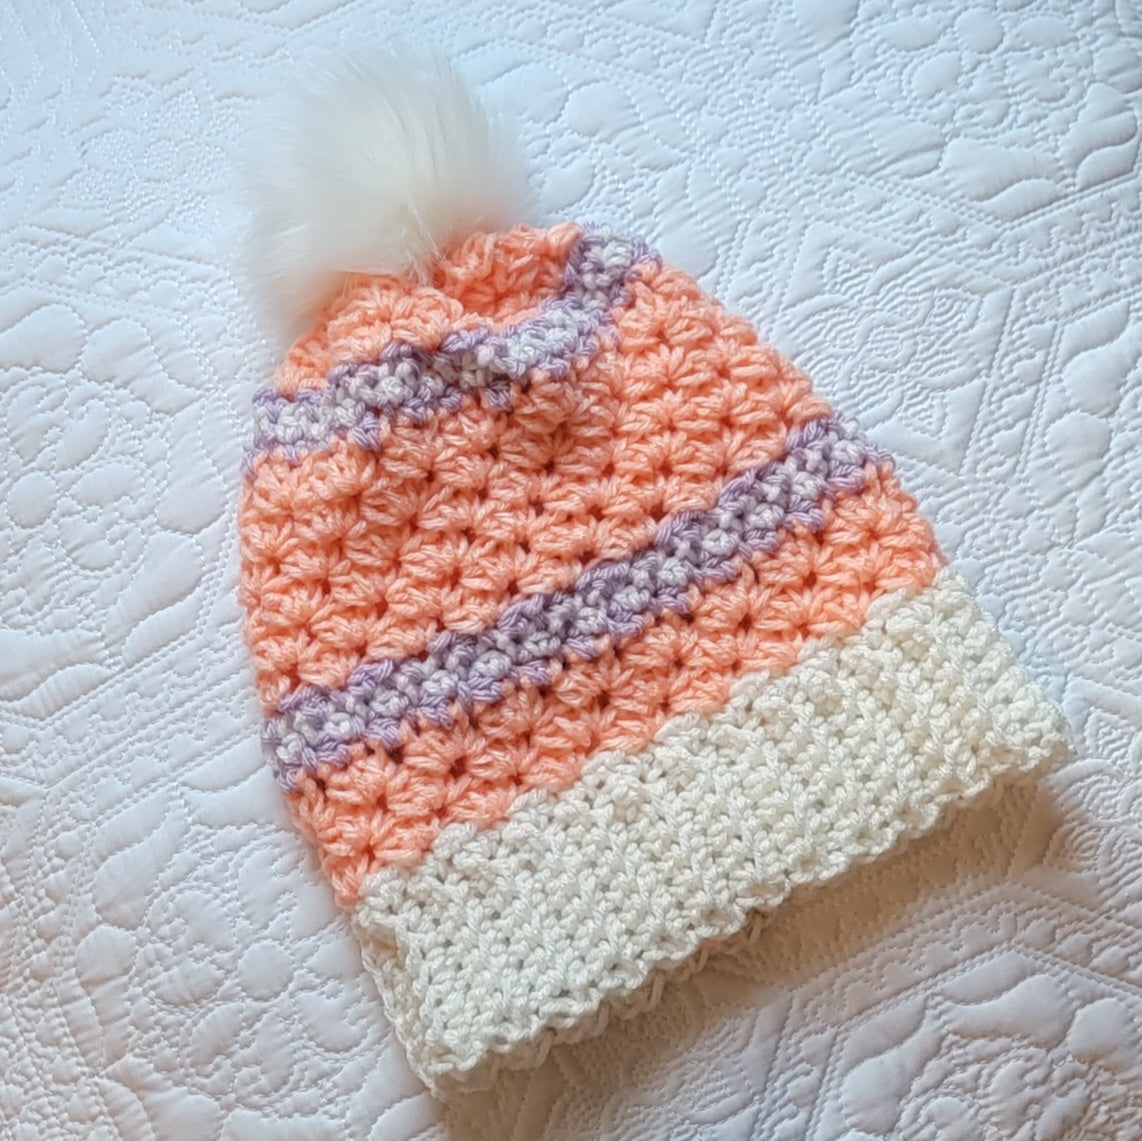 Crochet Pattern: Endless Love Slouchy Hat